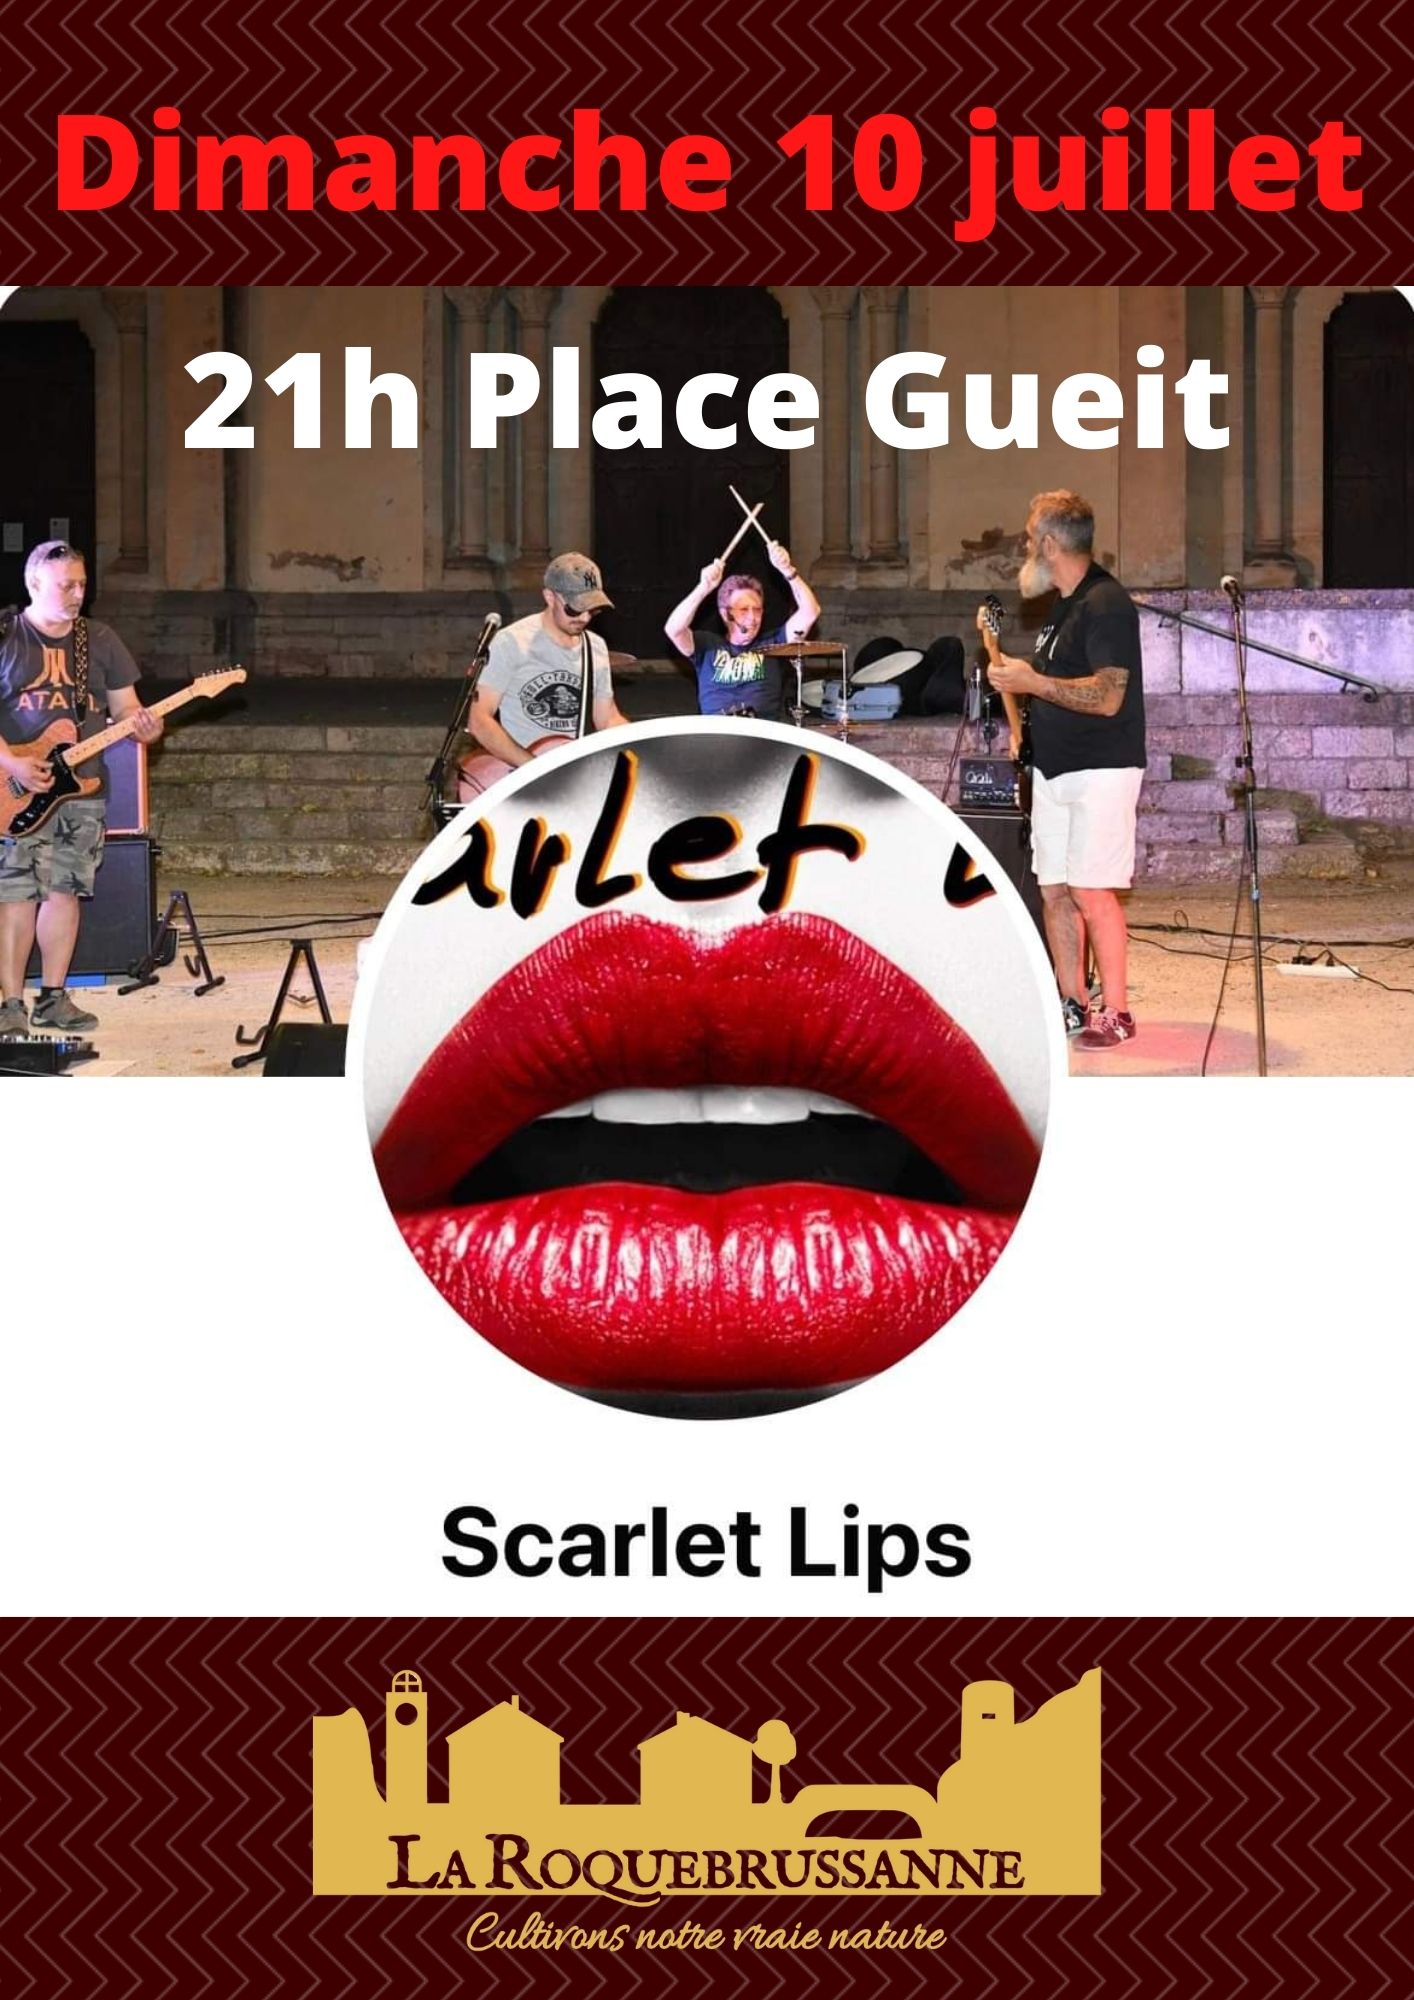 Concert scarlet lips juillet 22